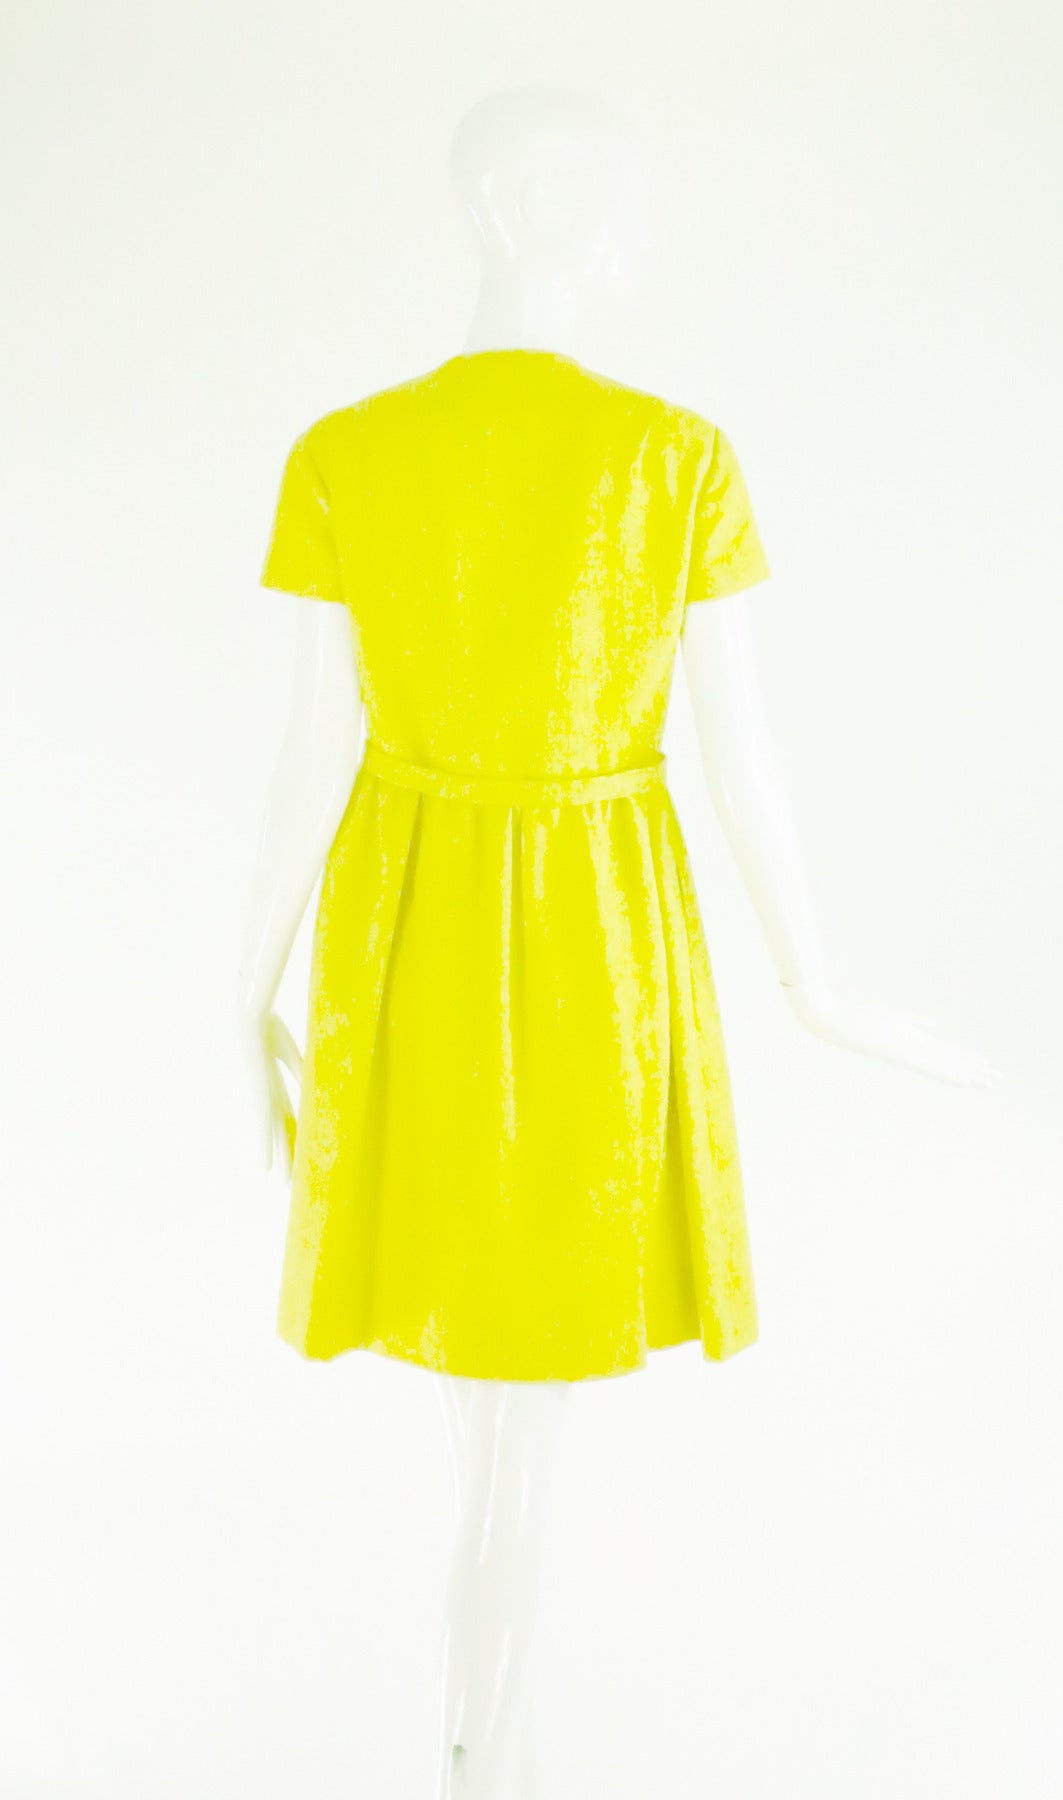 Women's 1960s Geoffrey Beene lemon yellow linen day dress